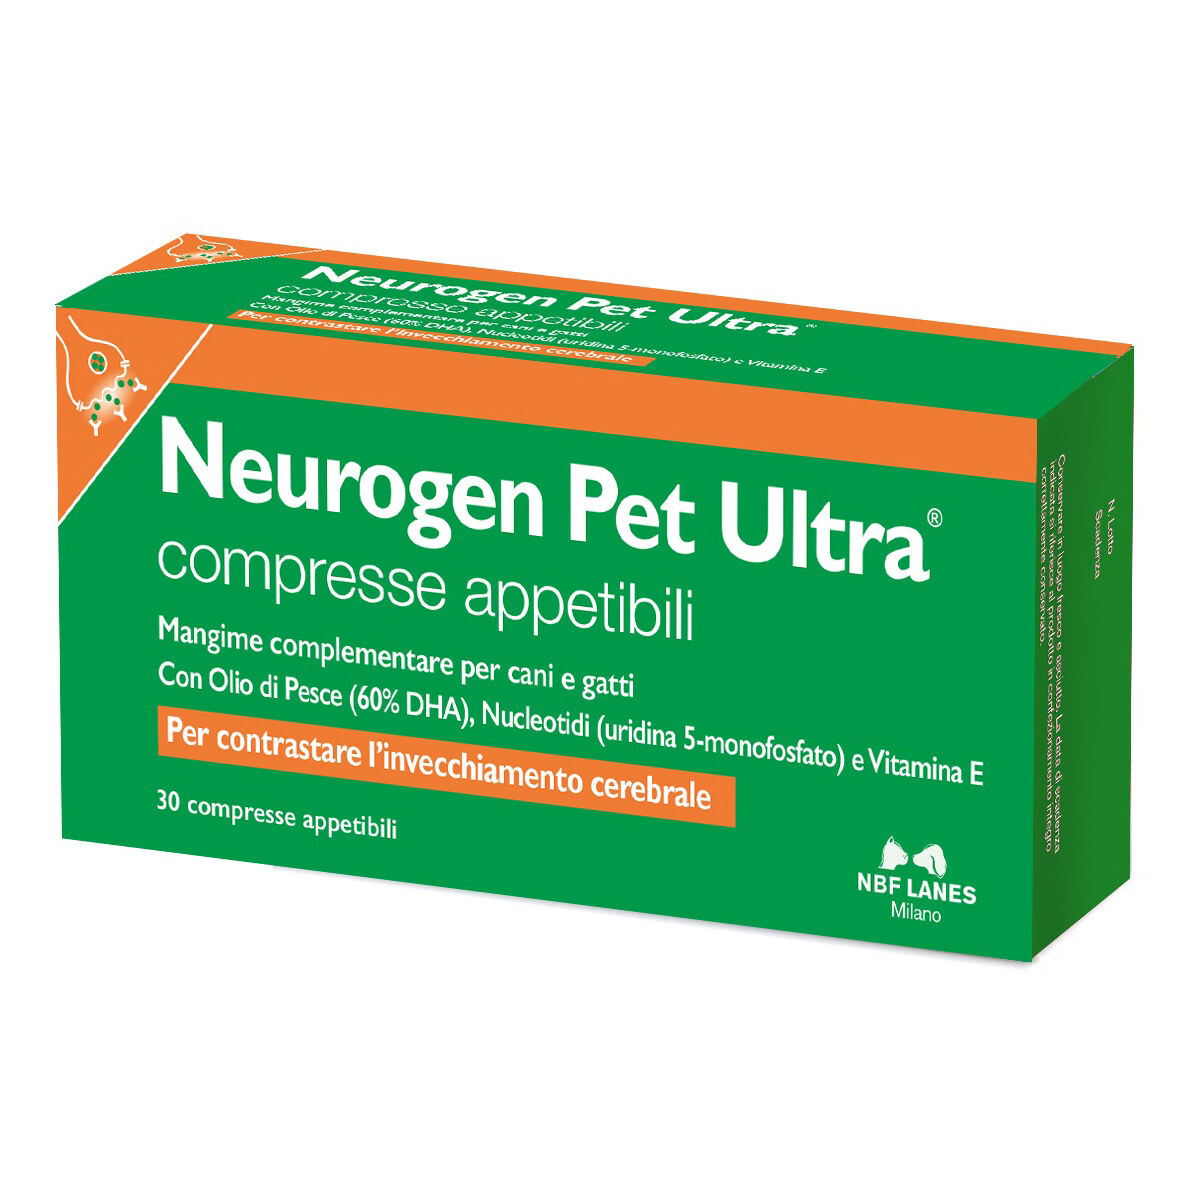 N.B.F. Lanes Srl Neurogen Pet Ultra 30 Compresse Appetibili